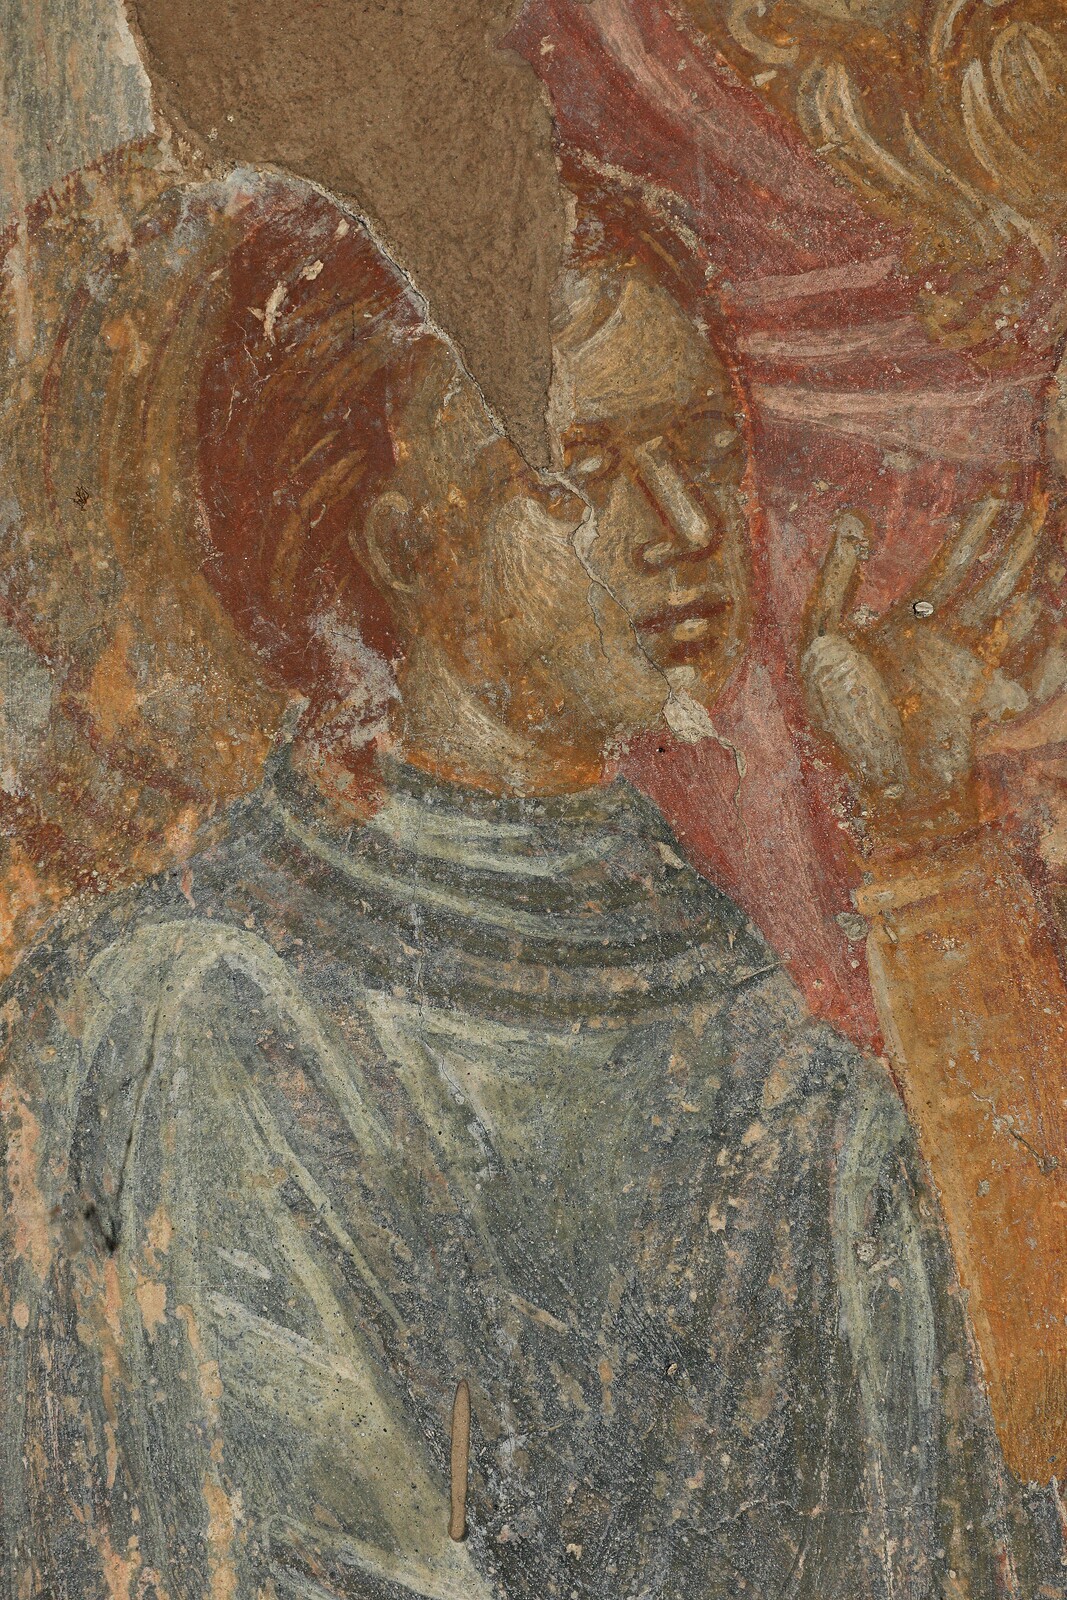 Mocking of Christ, detail